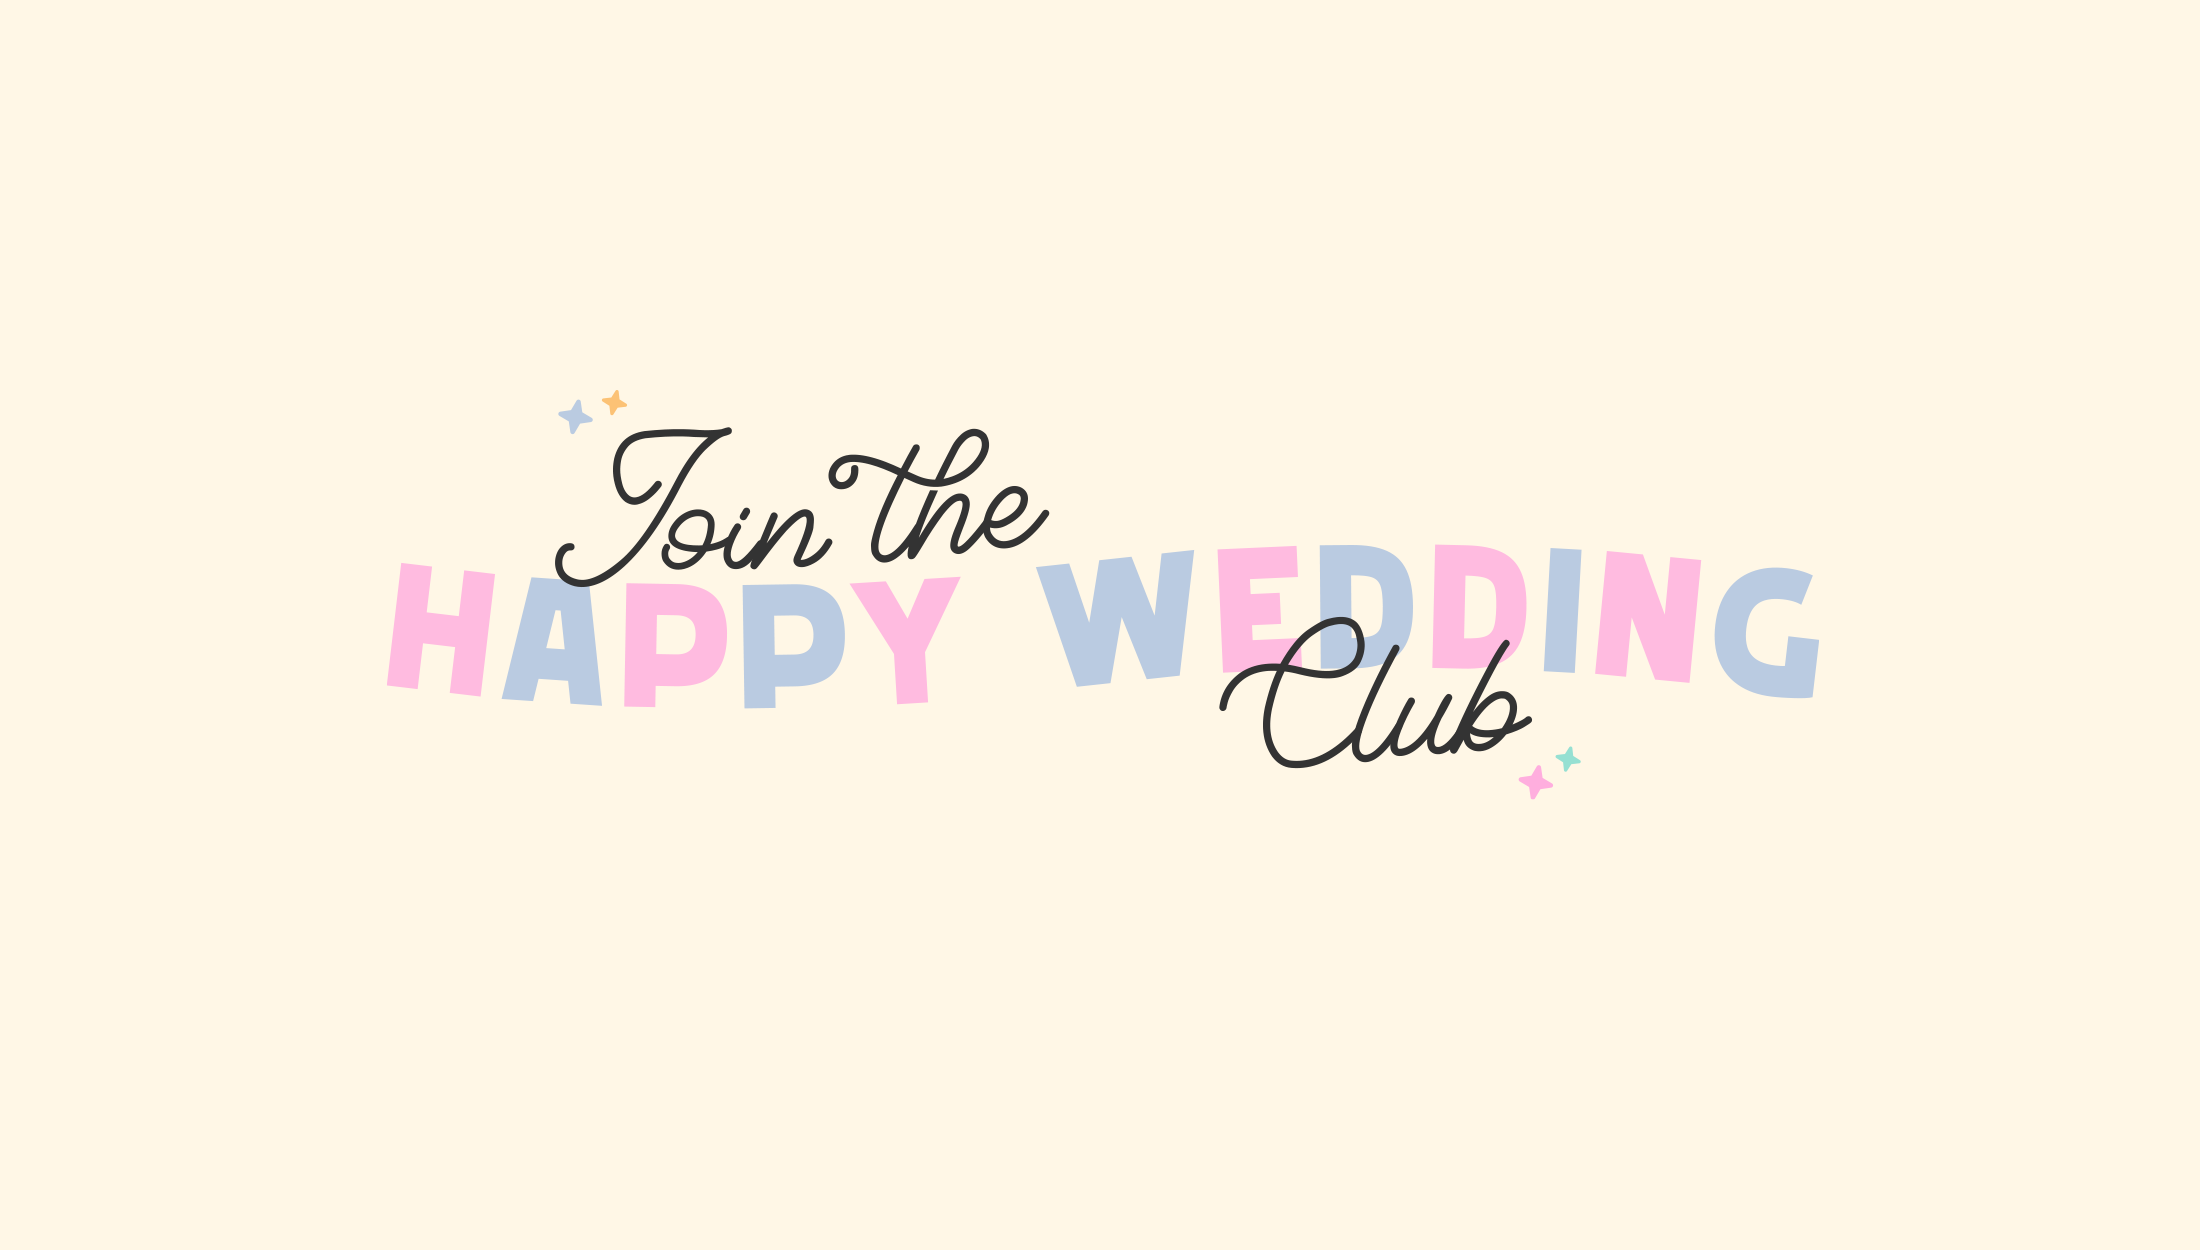 Newsletter title for Whimsical Wonderland Weddings, UK wedding inspiration blog and supplier - designed by Wiltshire-based graphic designer, Kaye Huett